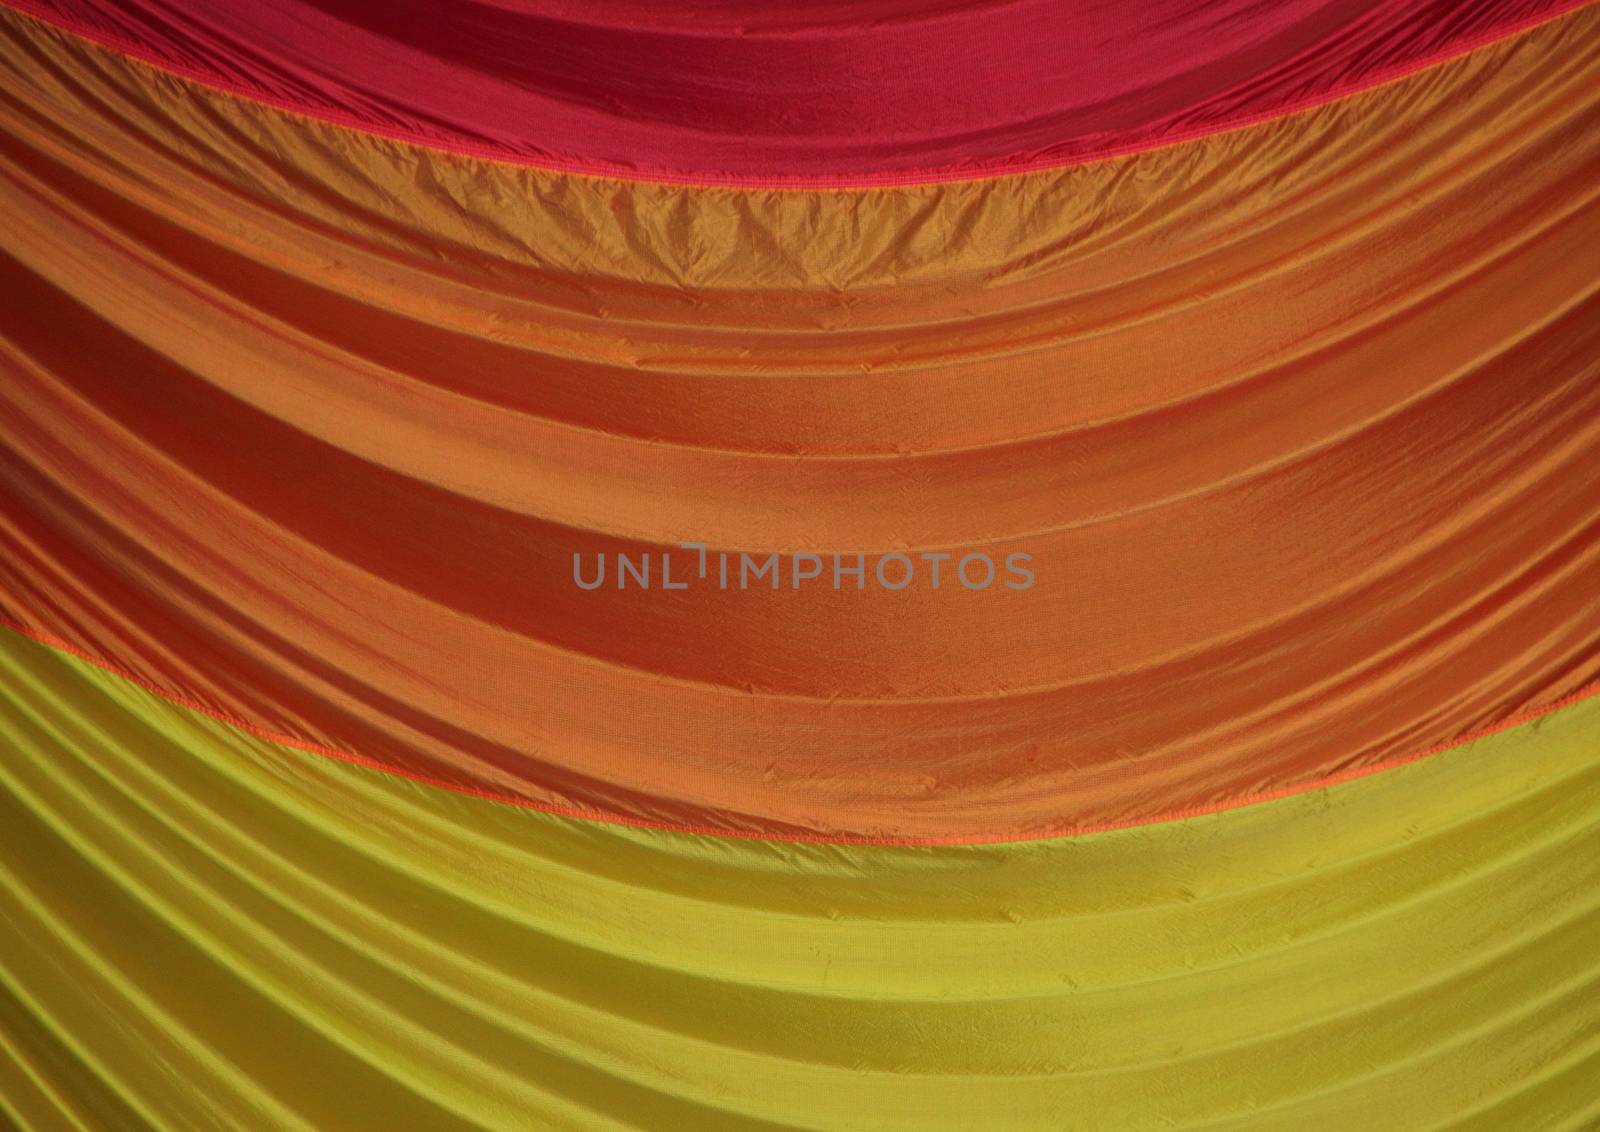 Segment of Parachute Fabric in Beautiful Colors